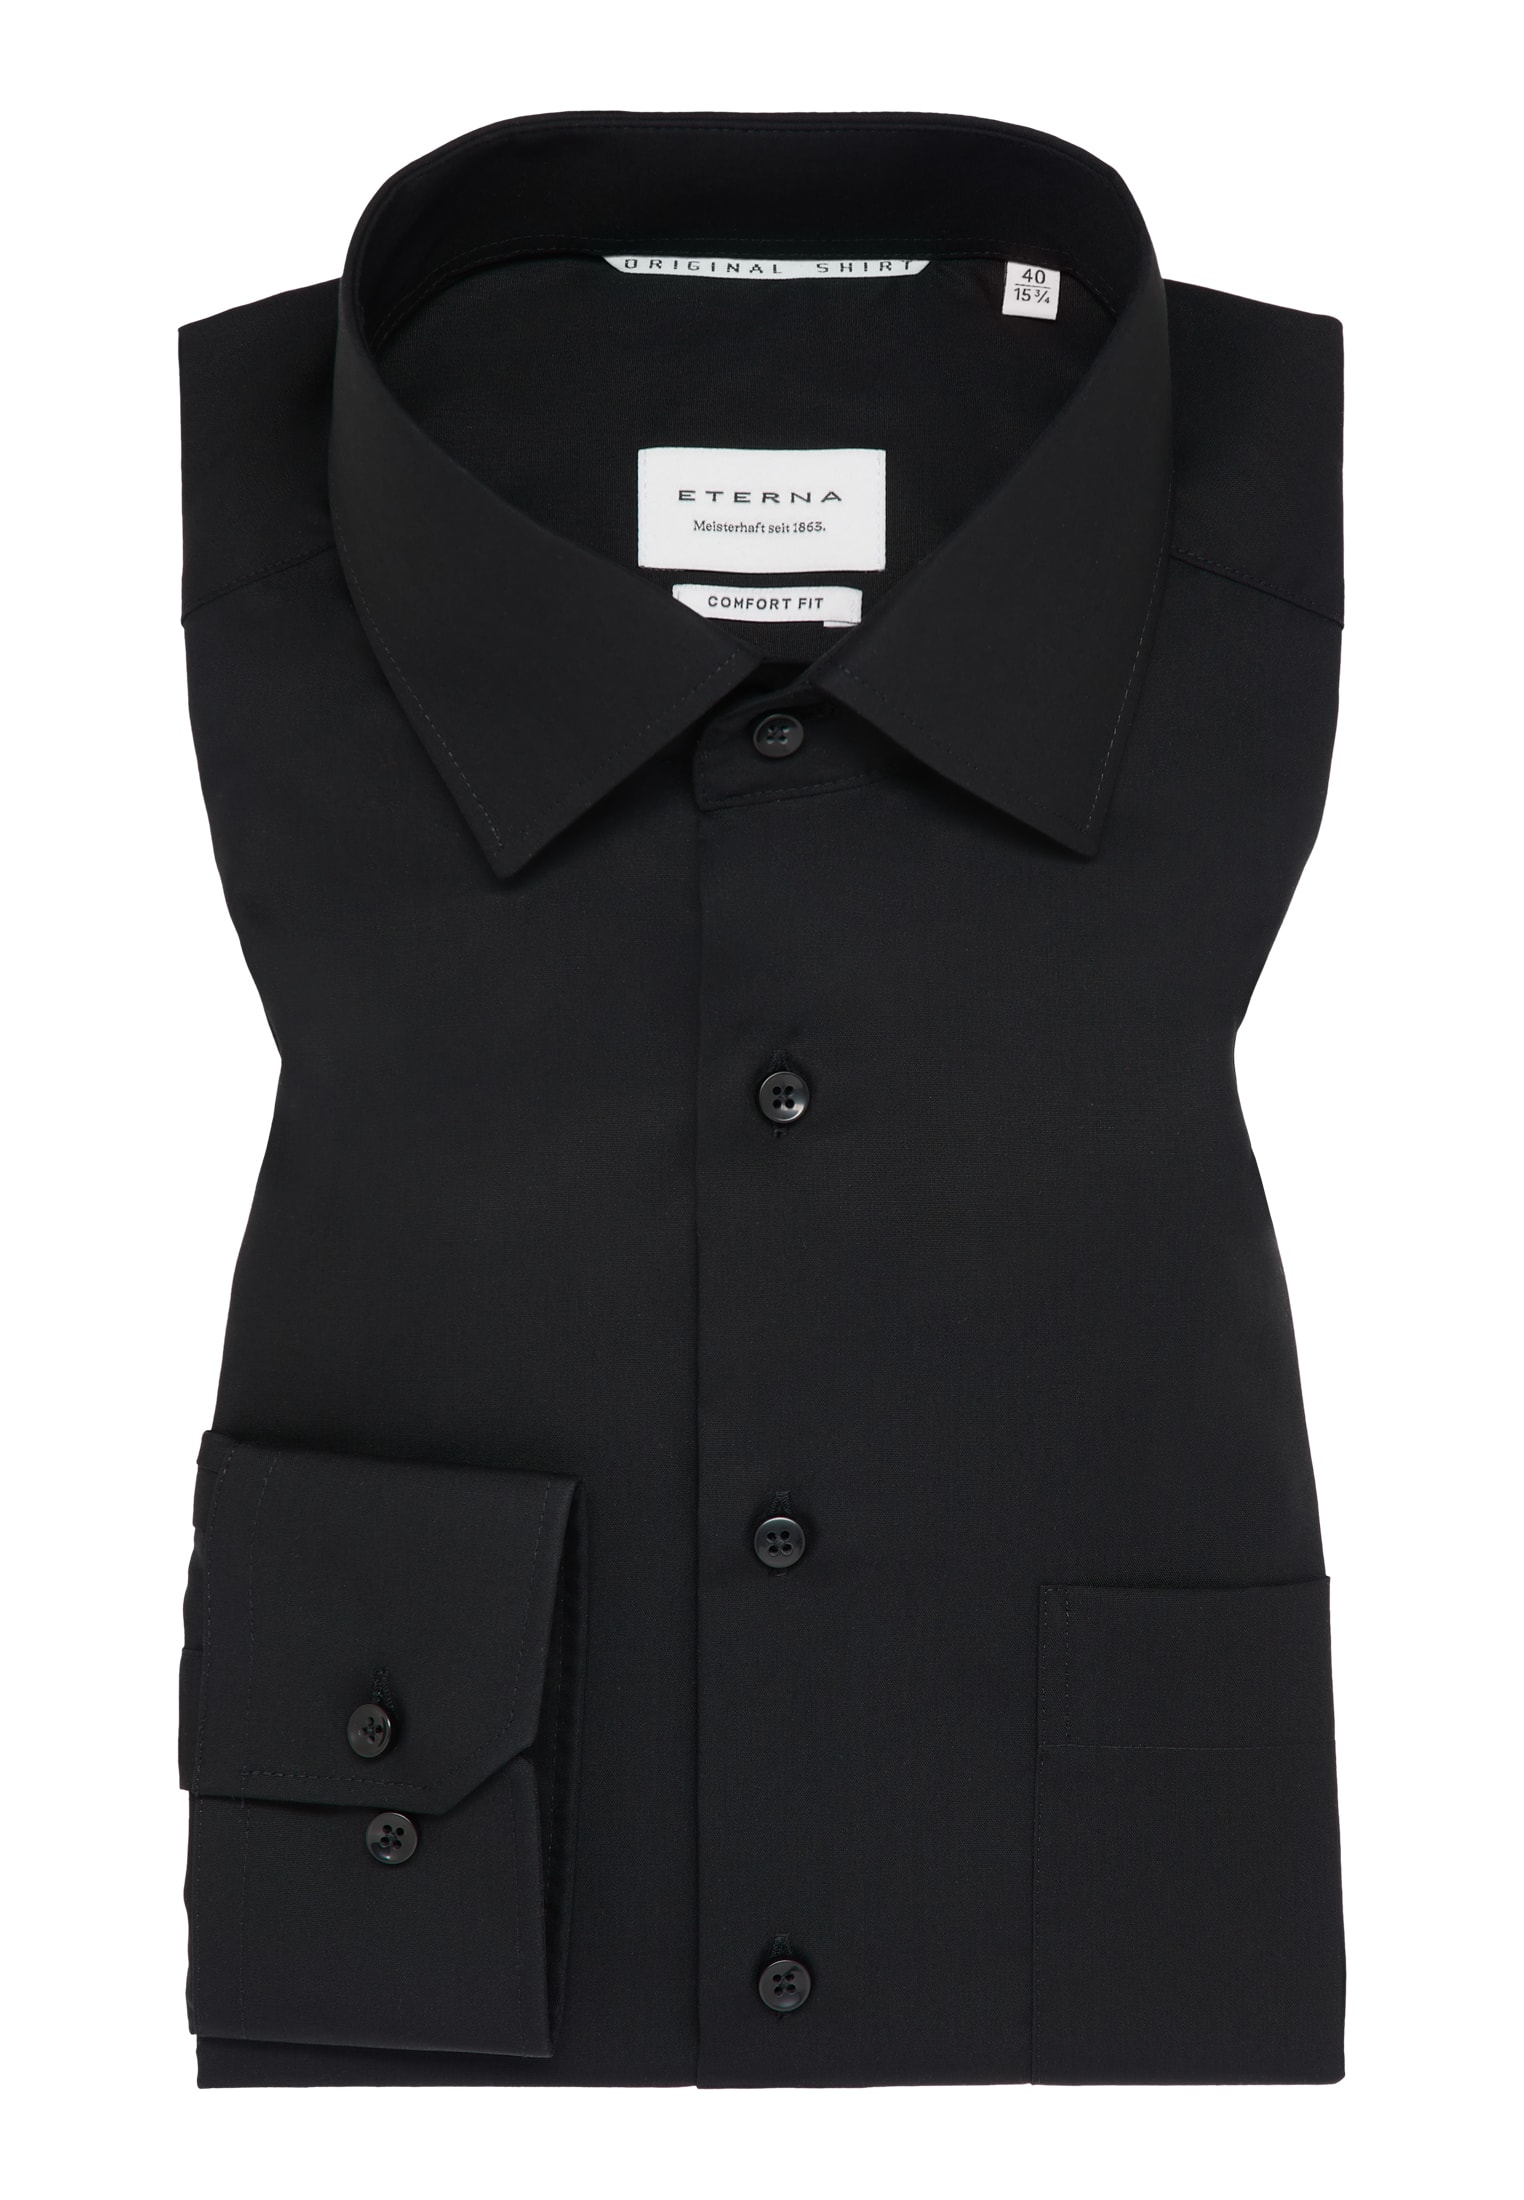 COMFORT FIT Original Shirt in schwarz unifarben | schwarz | 46 | Langarm |  1SH11781-03-91-46-1/1